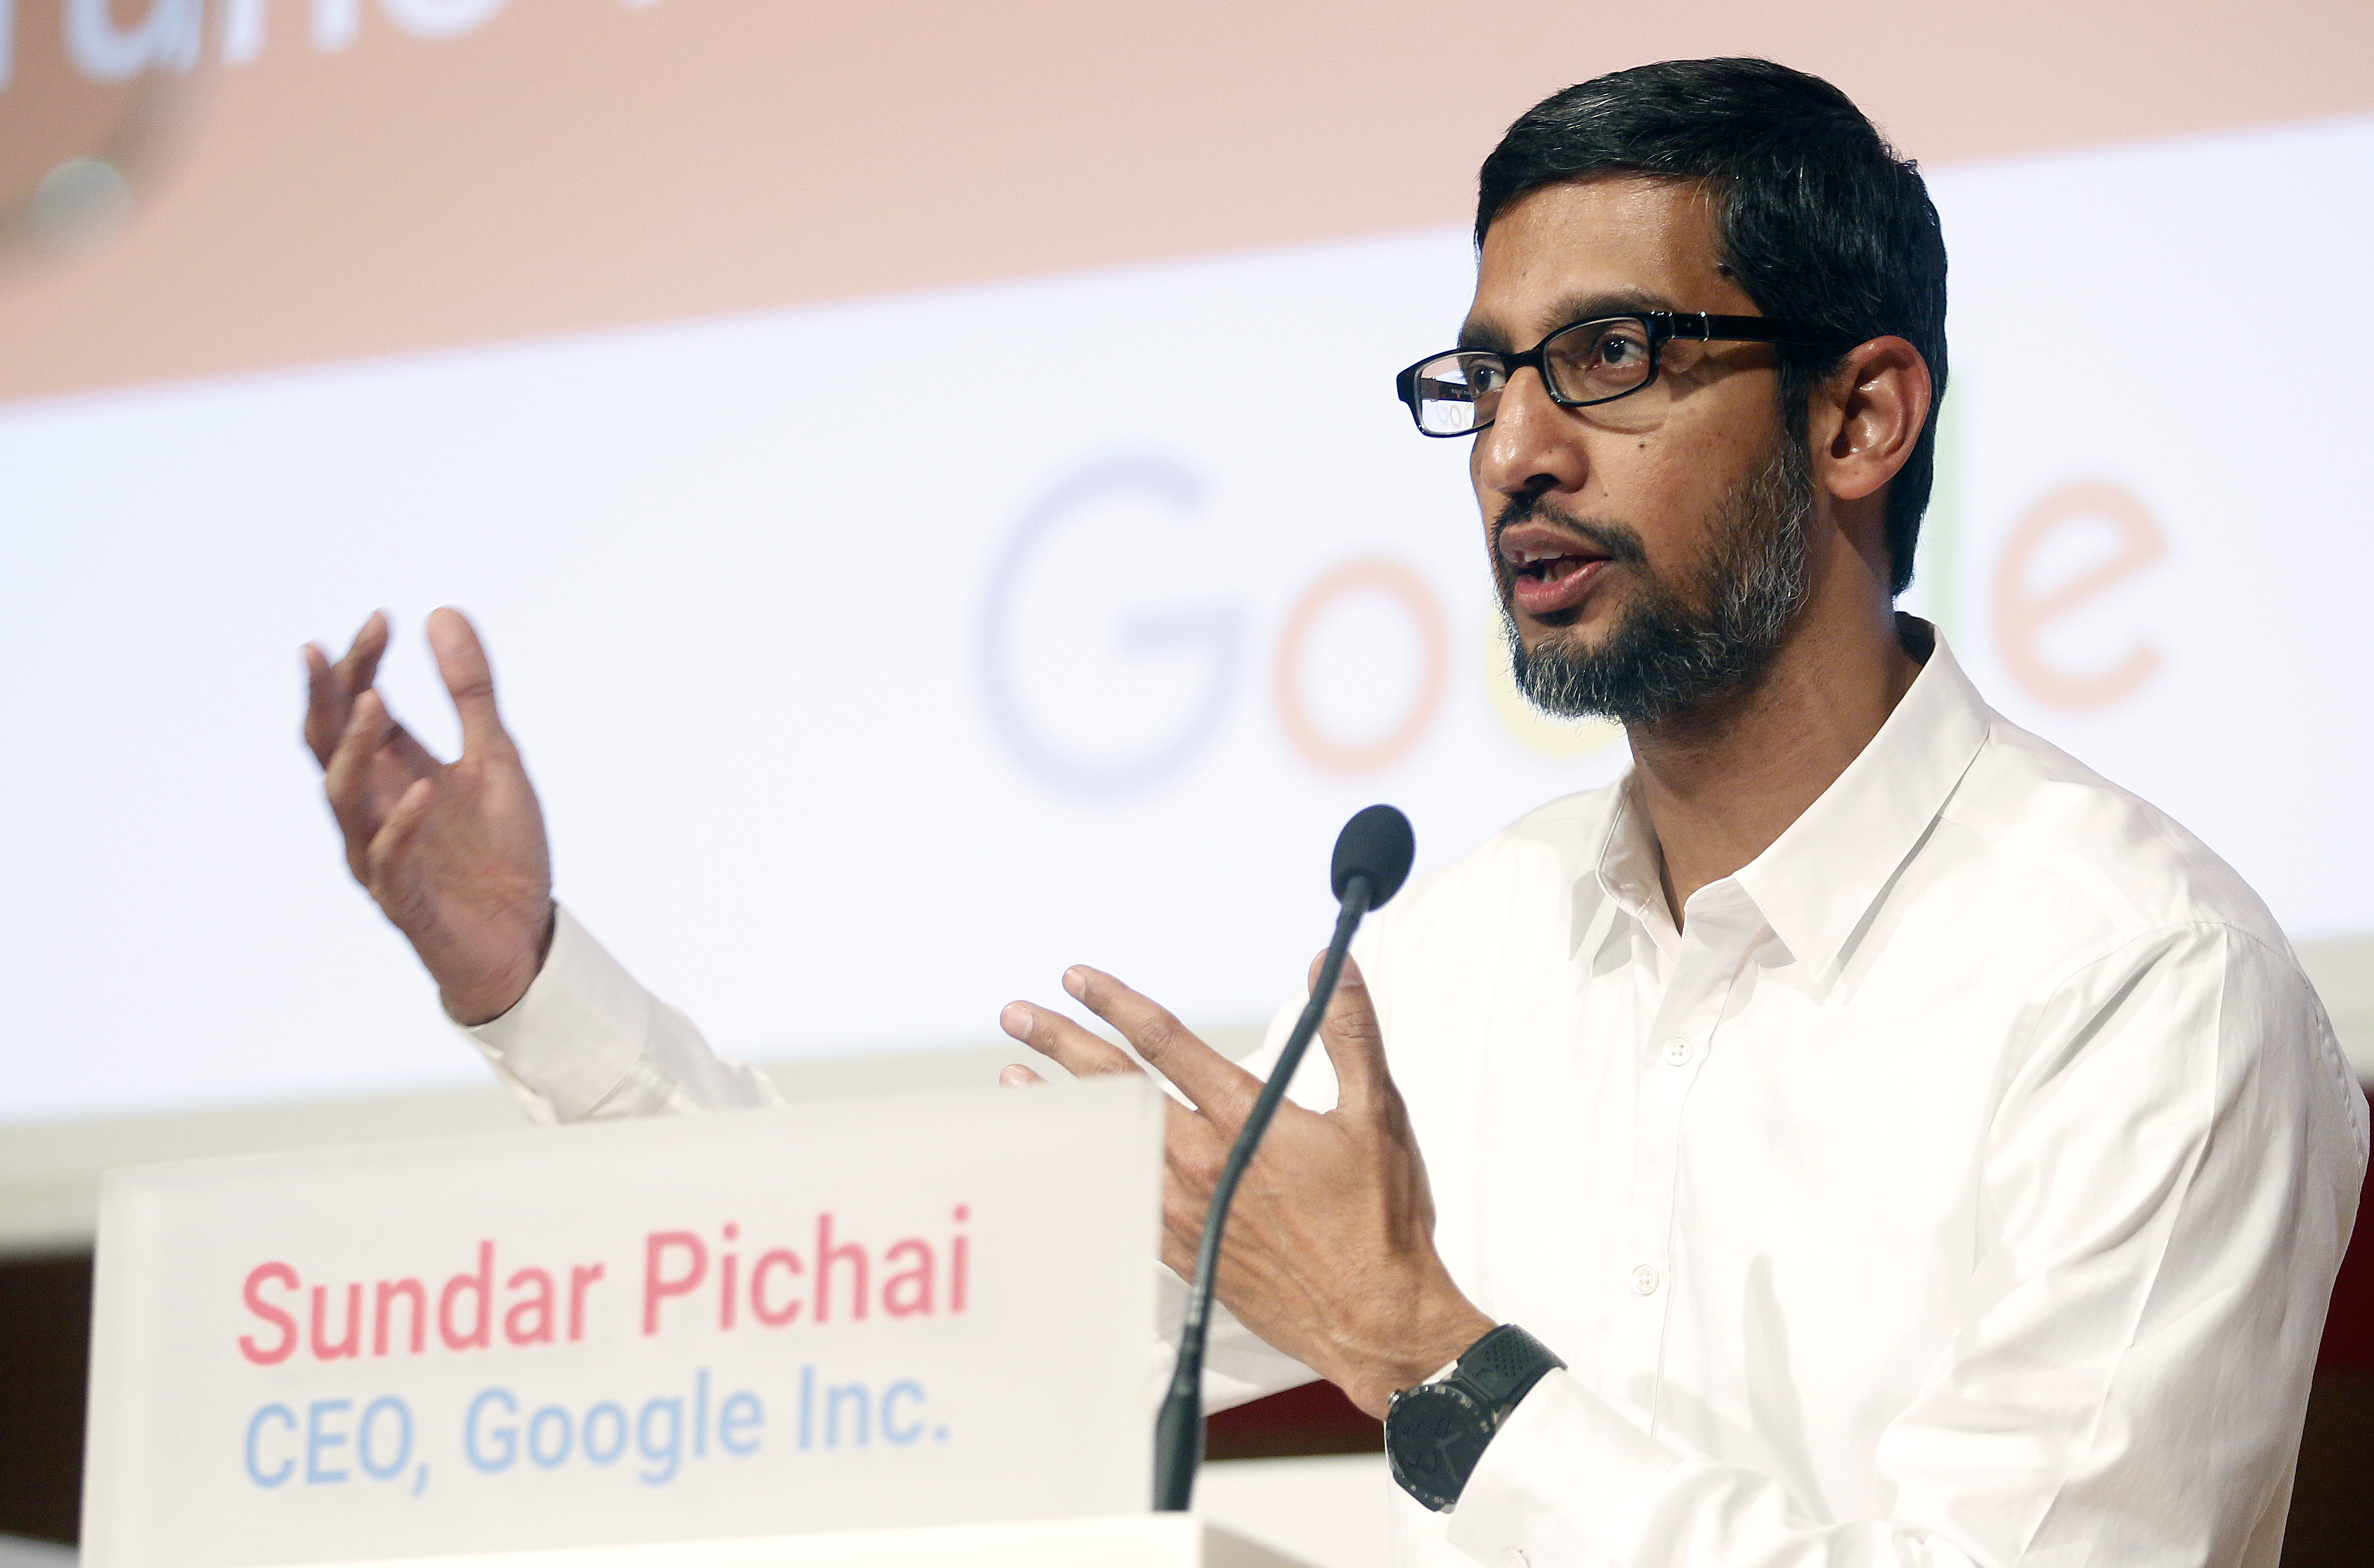 Sundar PICHAI, Google CEO Gives A Keynote To The Sciences Po Students